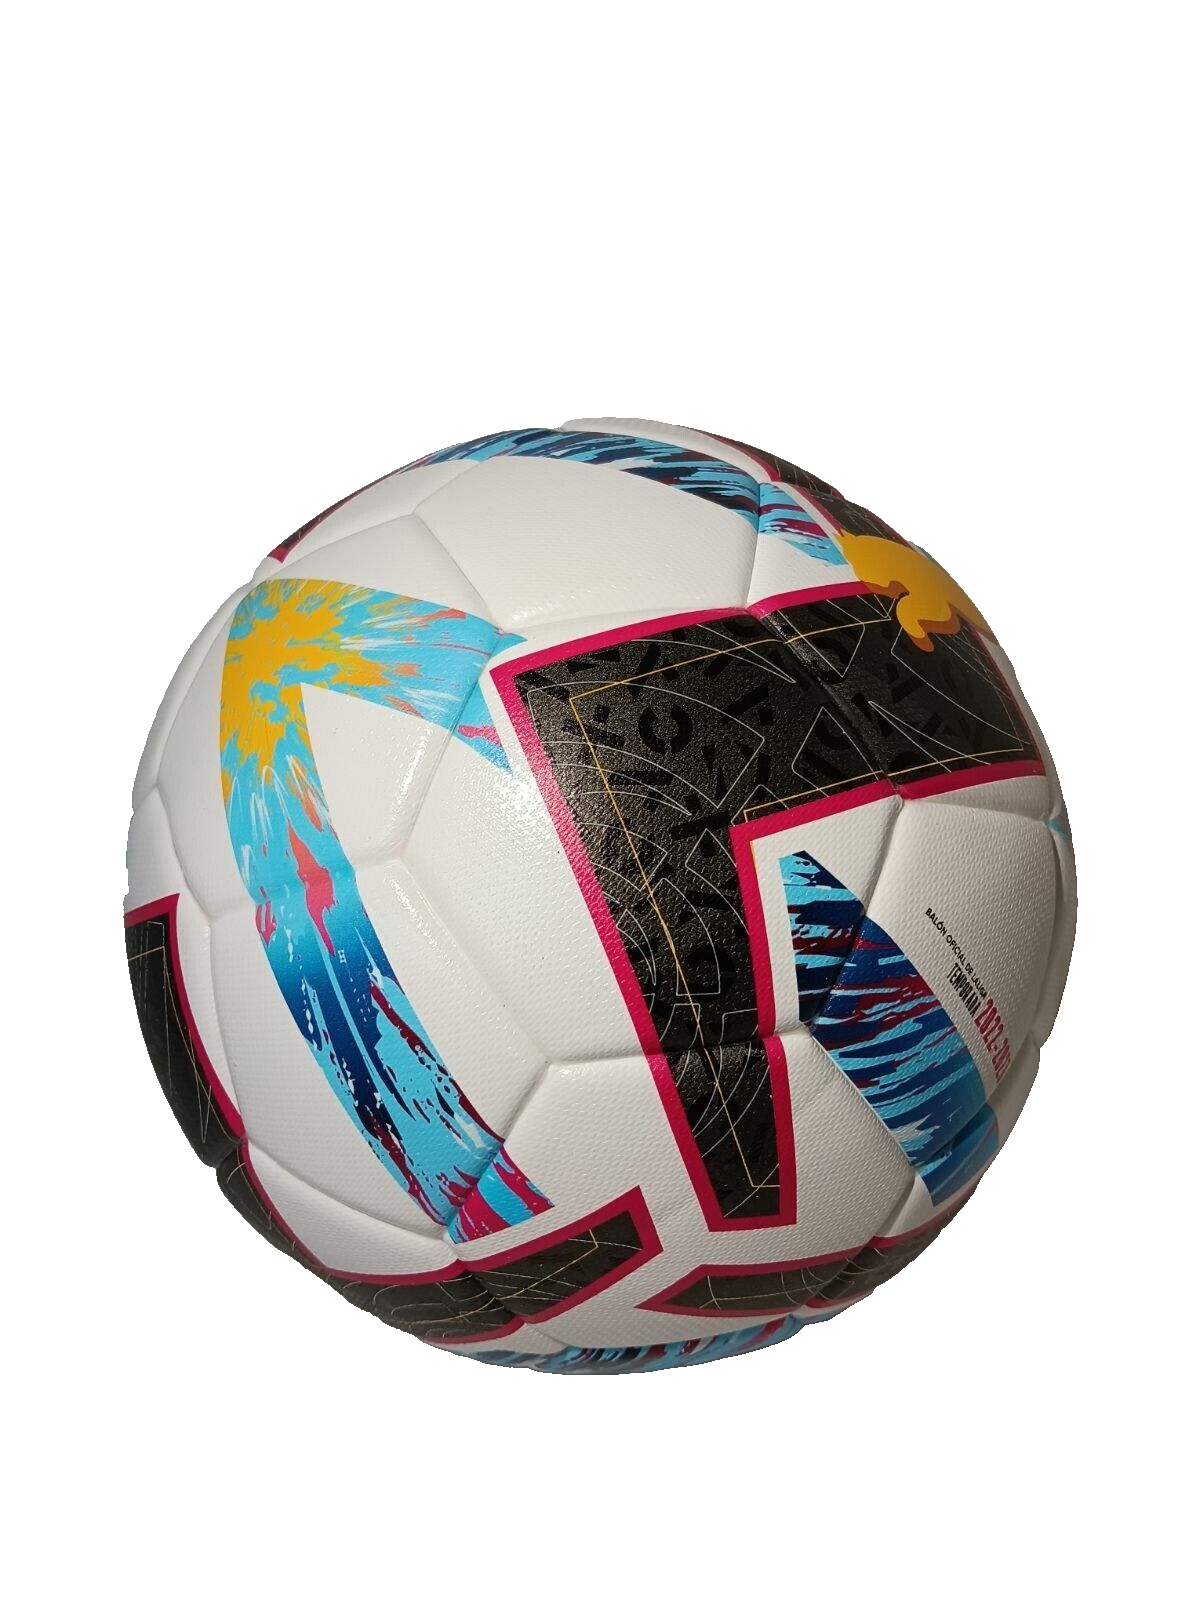 Puma 2022-23 La Liga Orbita 1 FIFA Quality Ball SIZE 5 NWT - $44.55